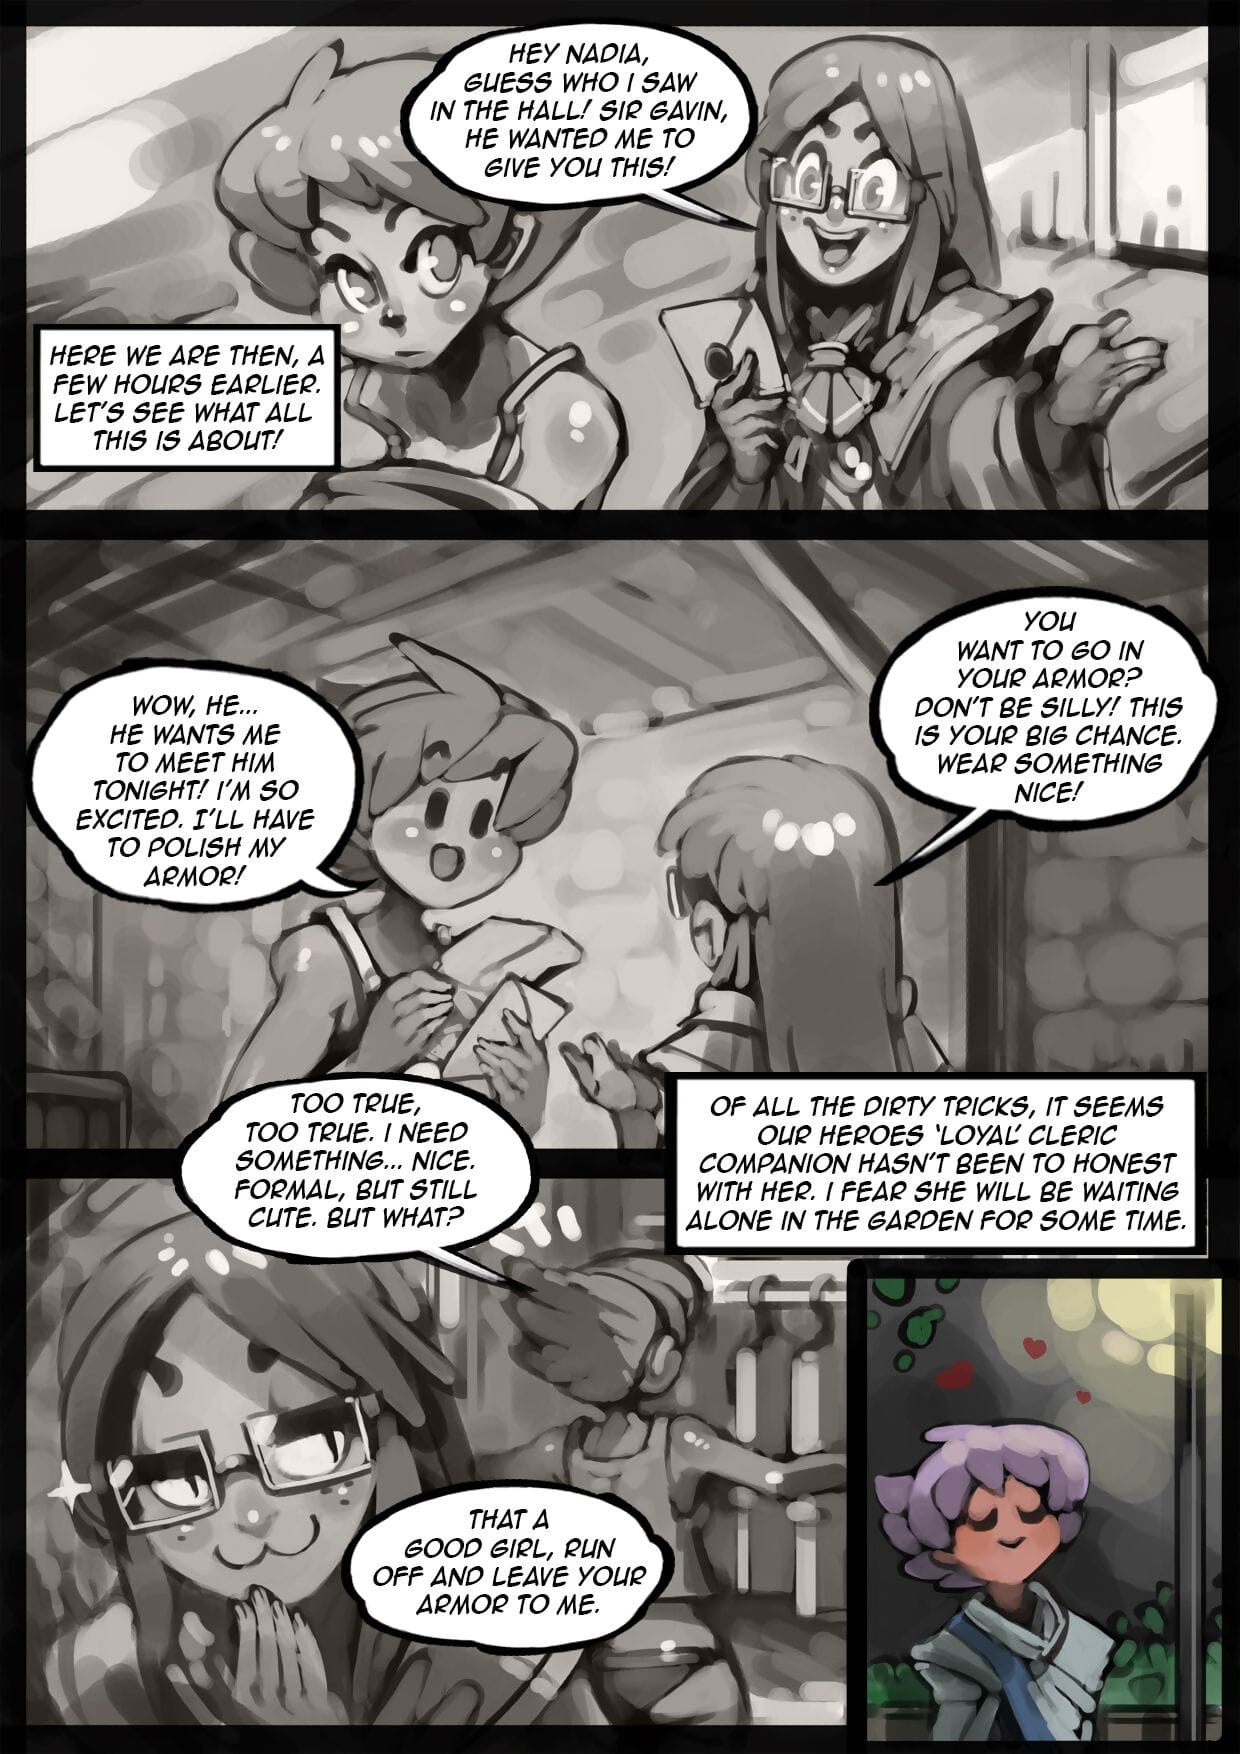 神圣的 骑士 nadia page 1